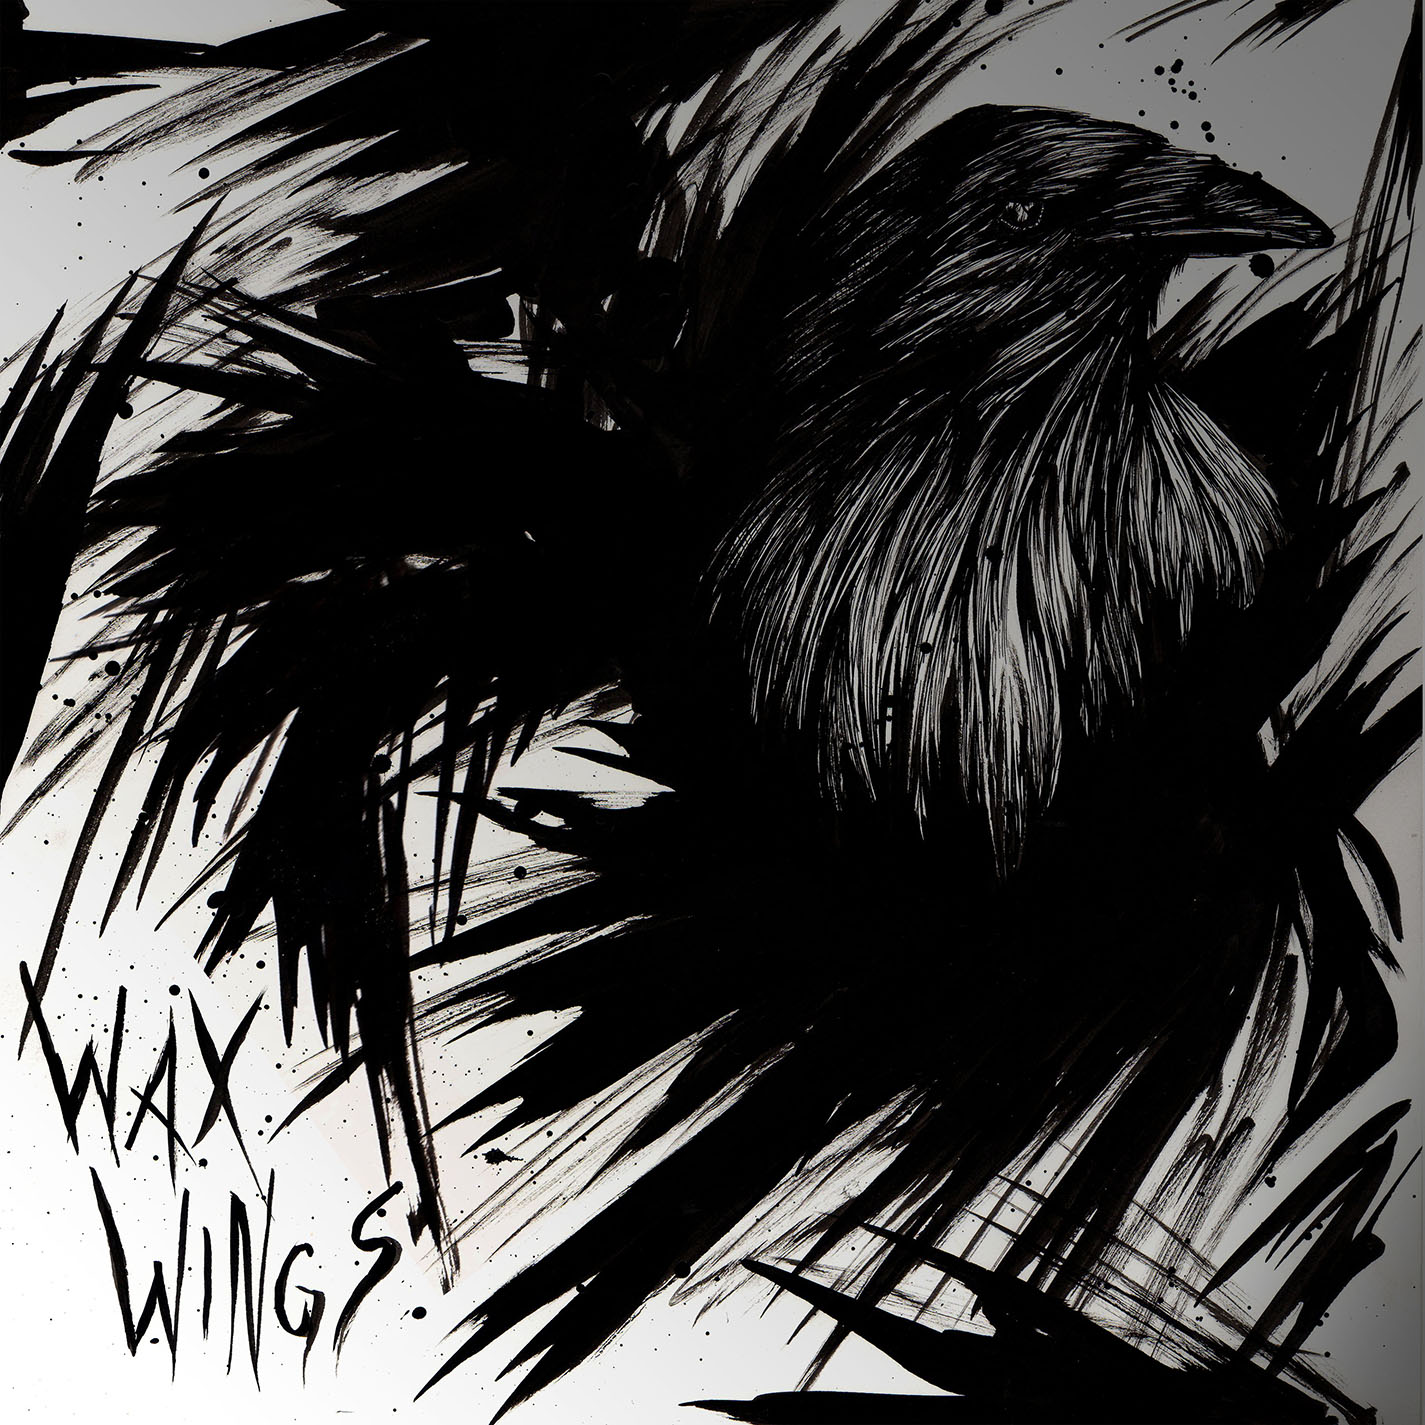 Wax Wings, "Wax Wings" album cover